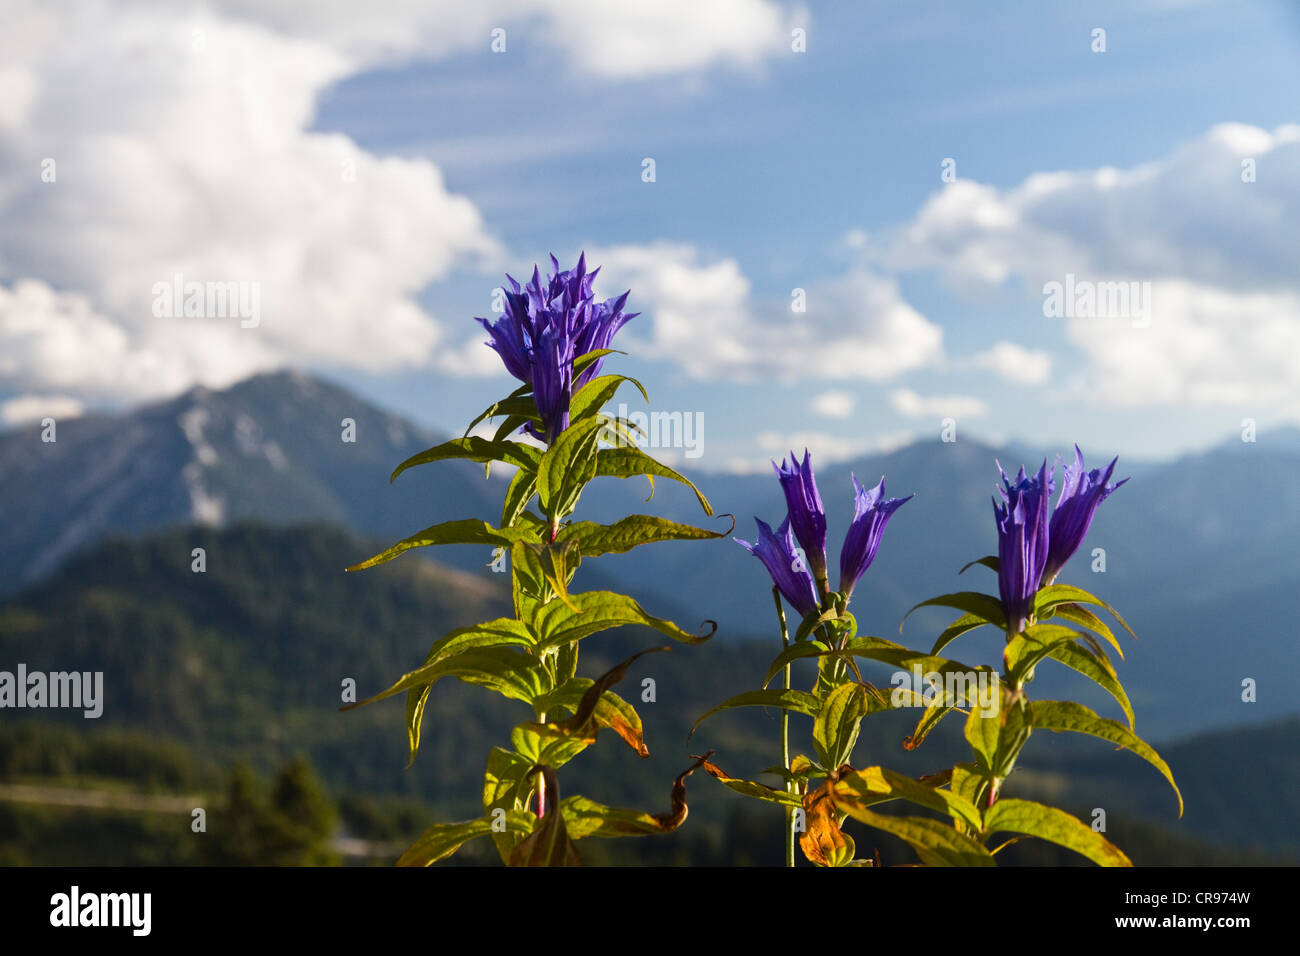 Willow (Gentiana asclepiadea gentiane), Alpes, Autriche, Europe Banque D'Images